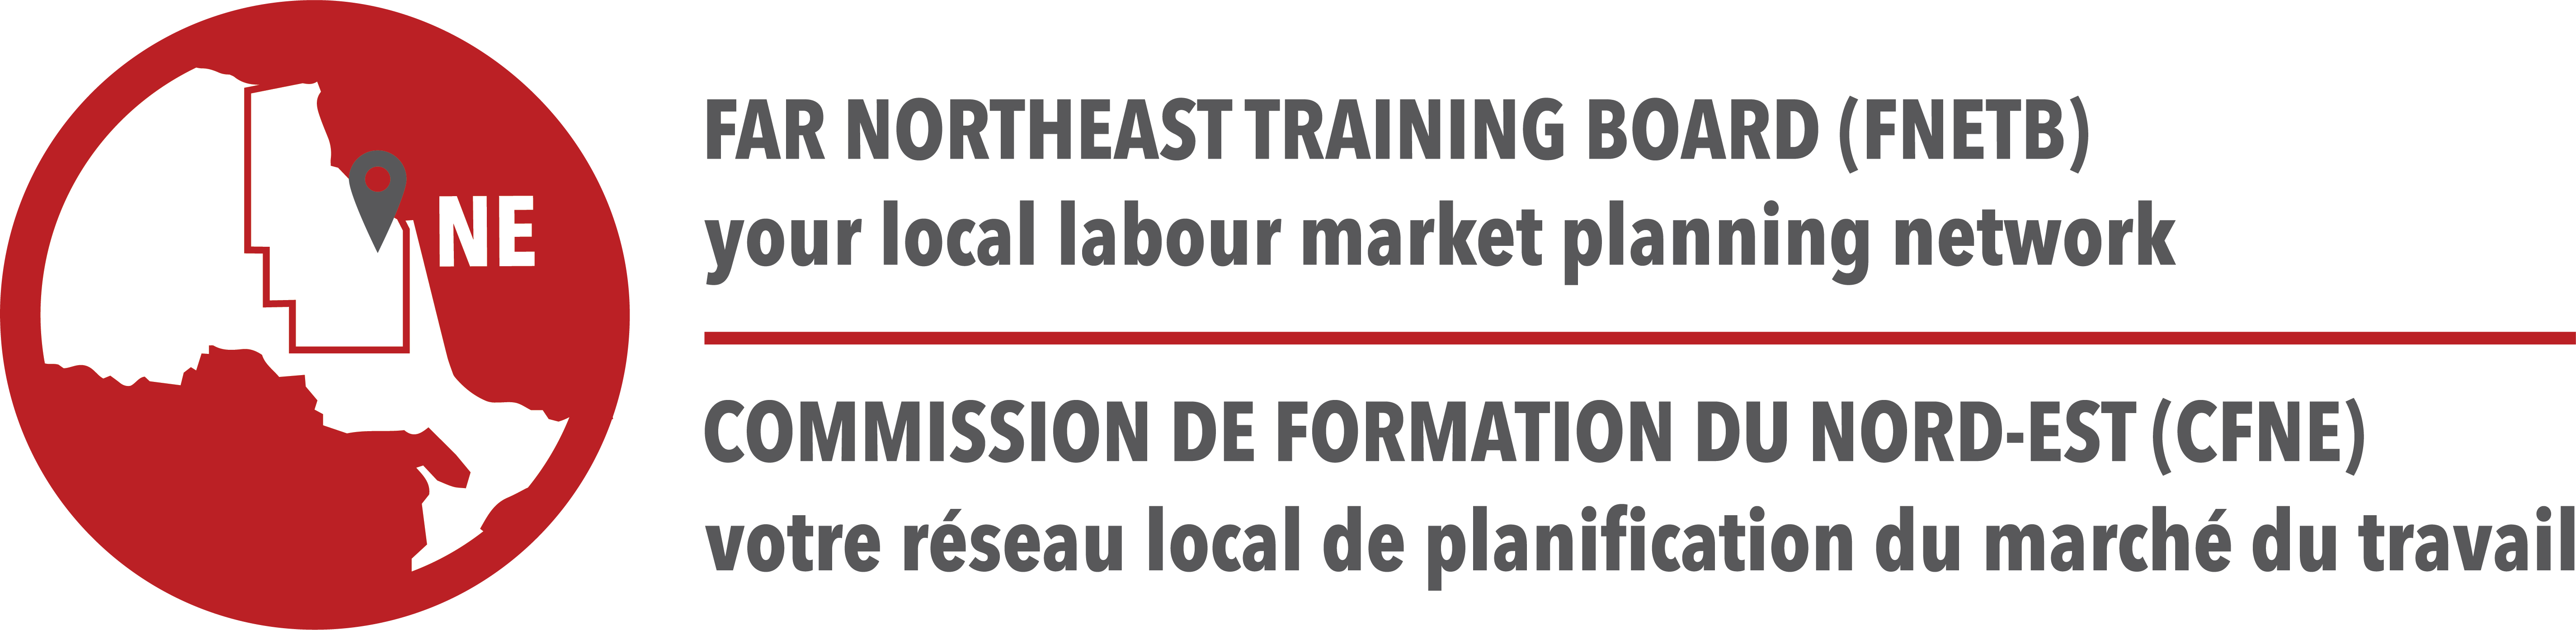 Far Northeast Training Board (FNETB) / Commission de formation du nord-est (CFNE)